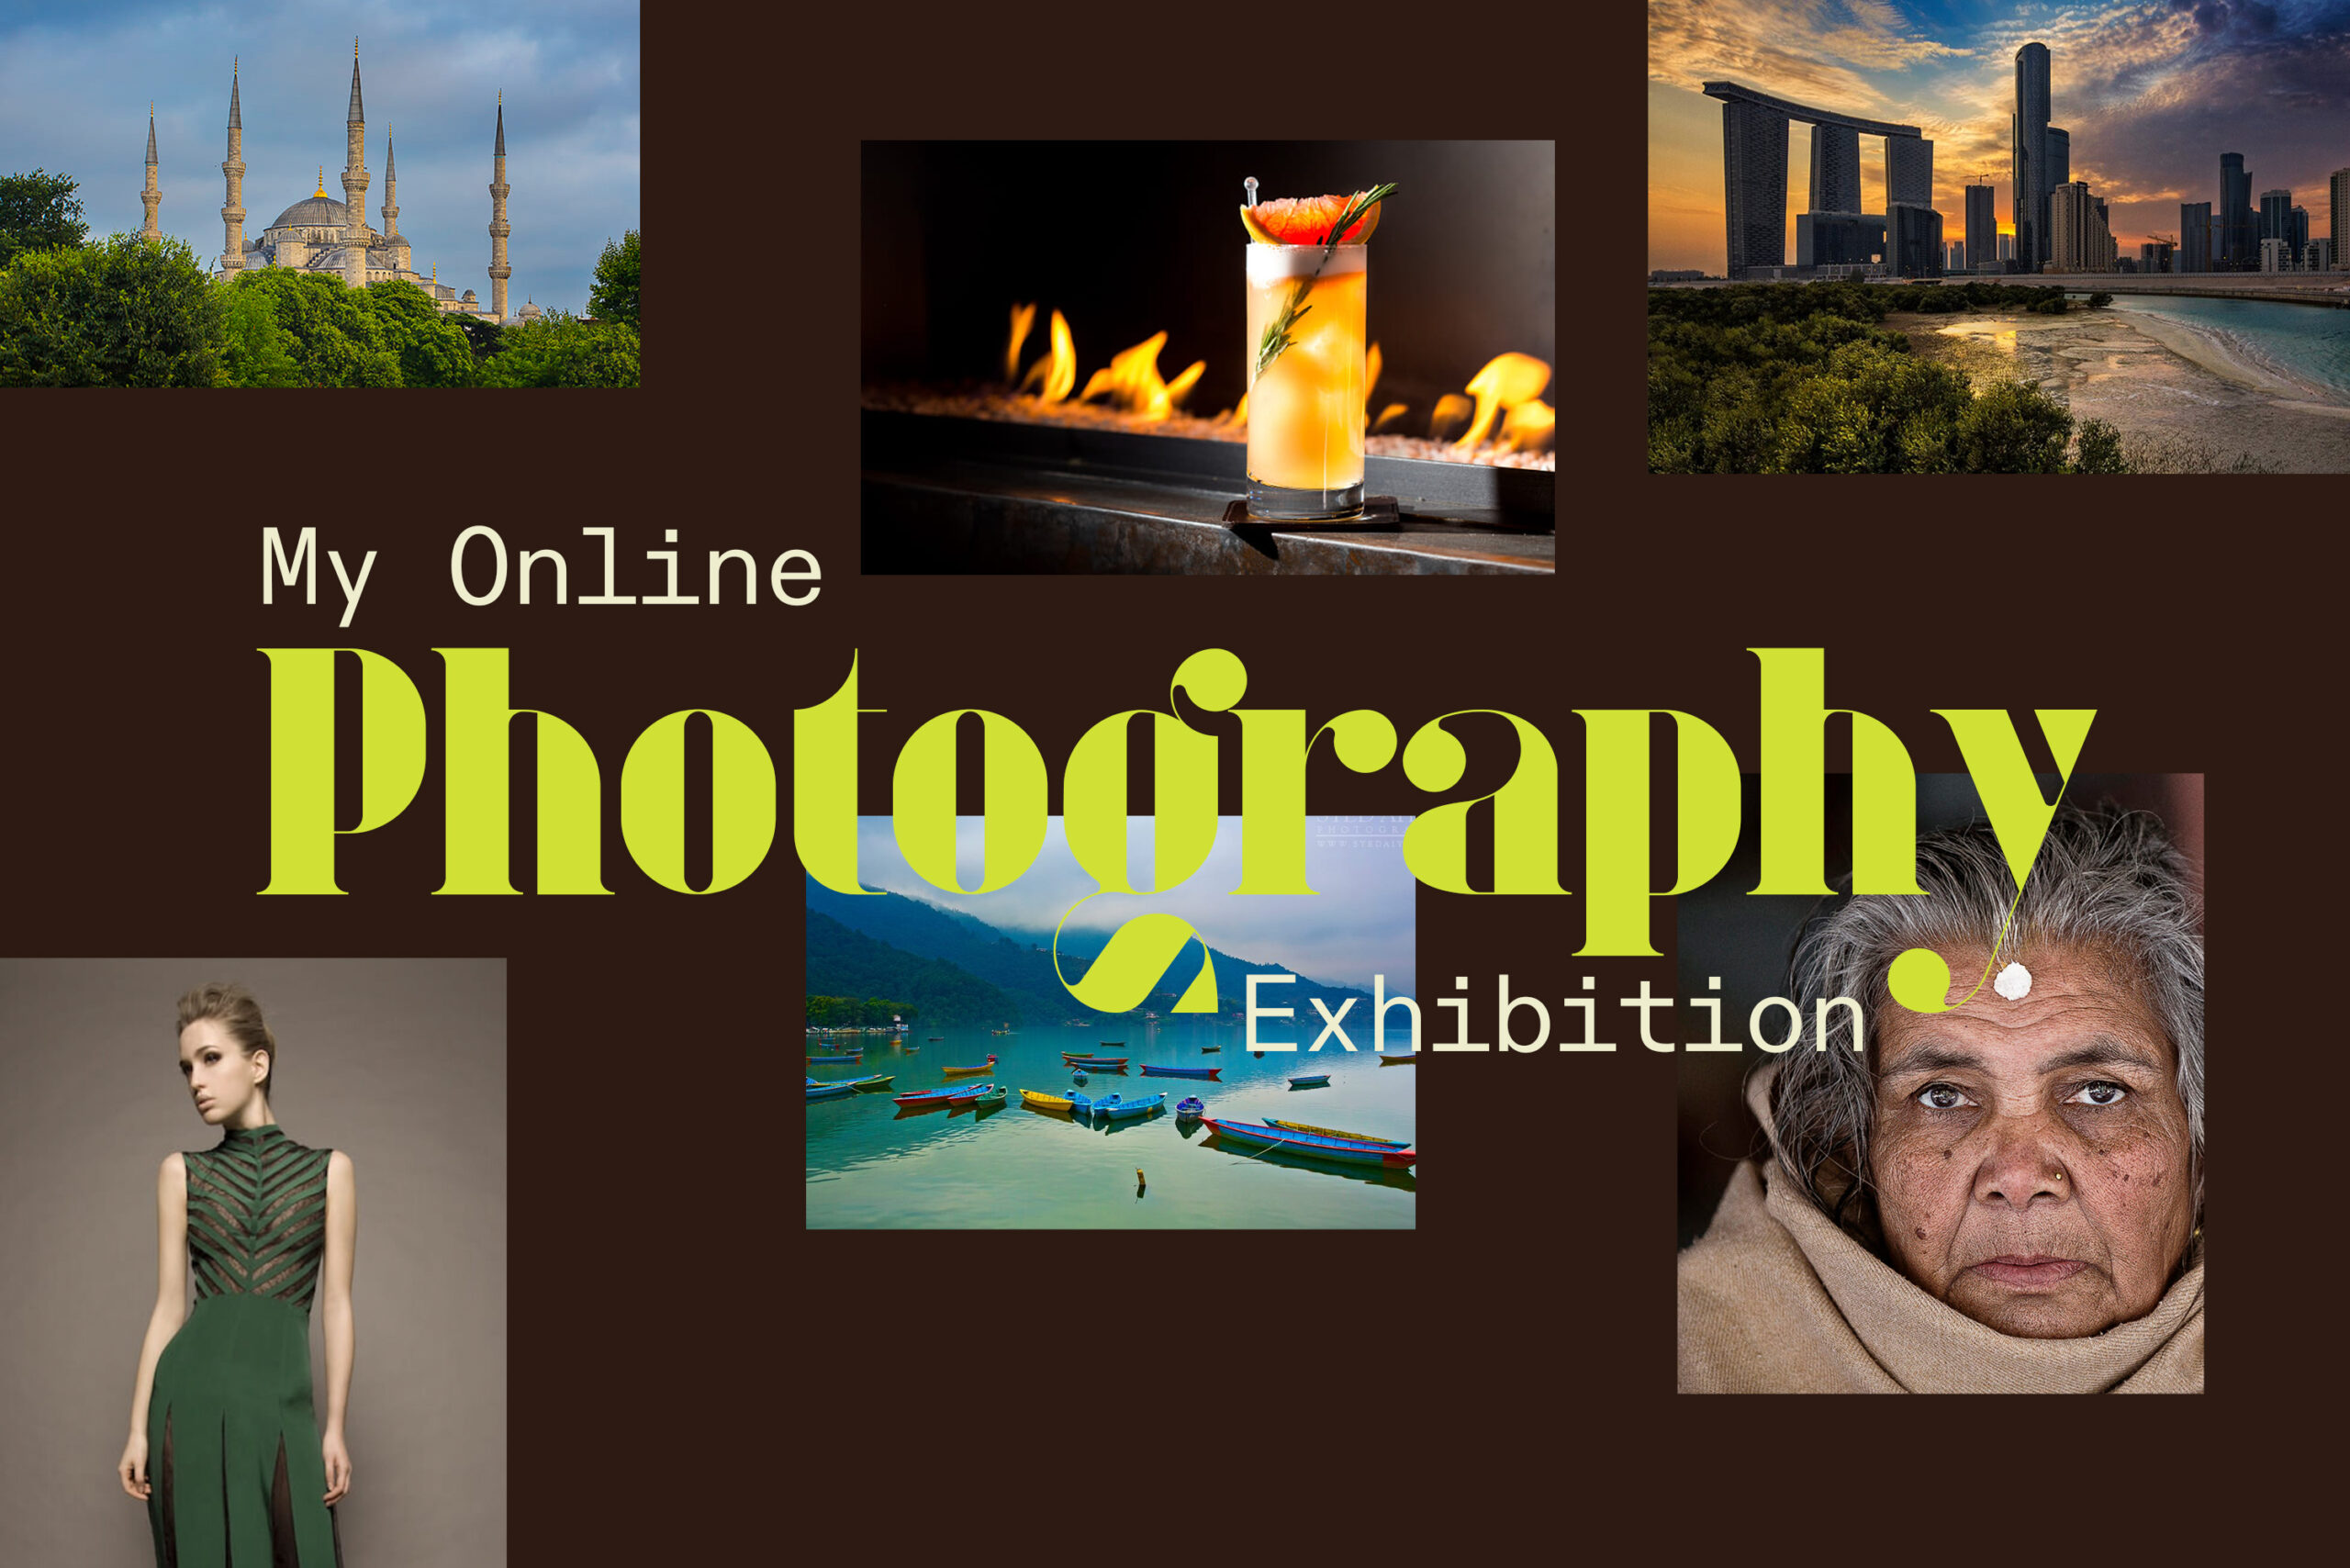 My Photogtaphy Exhibition